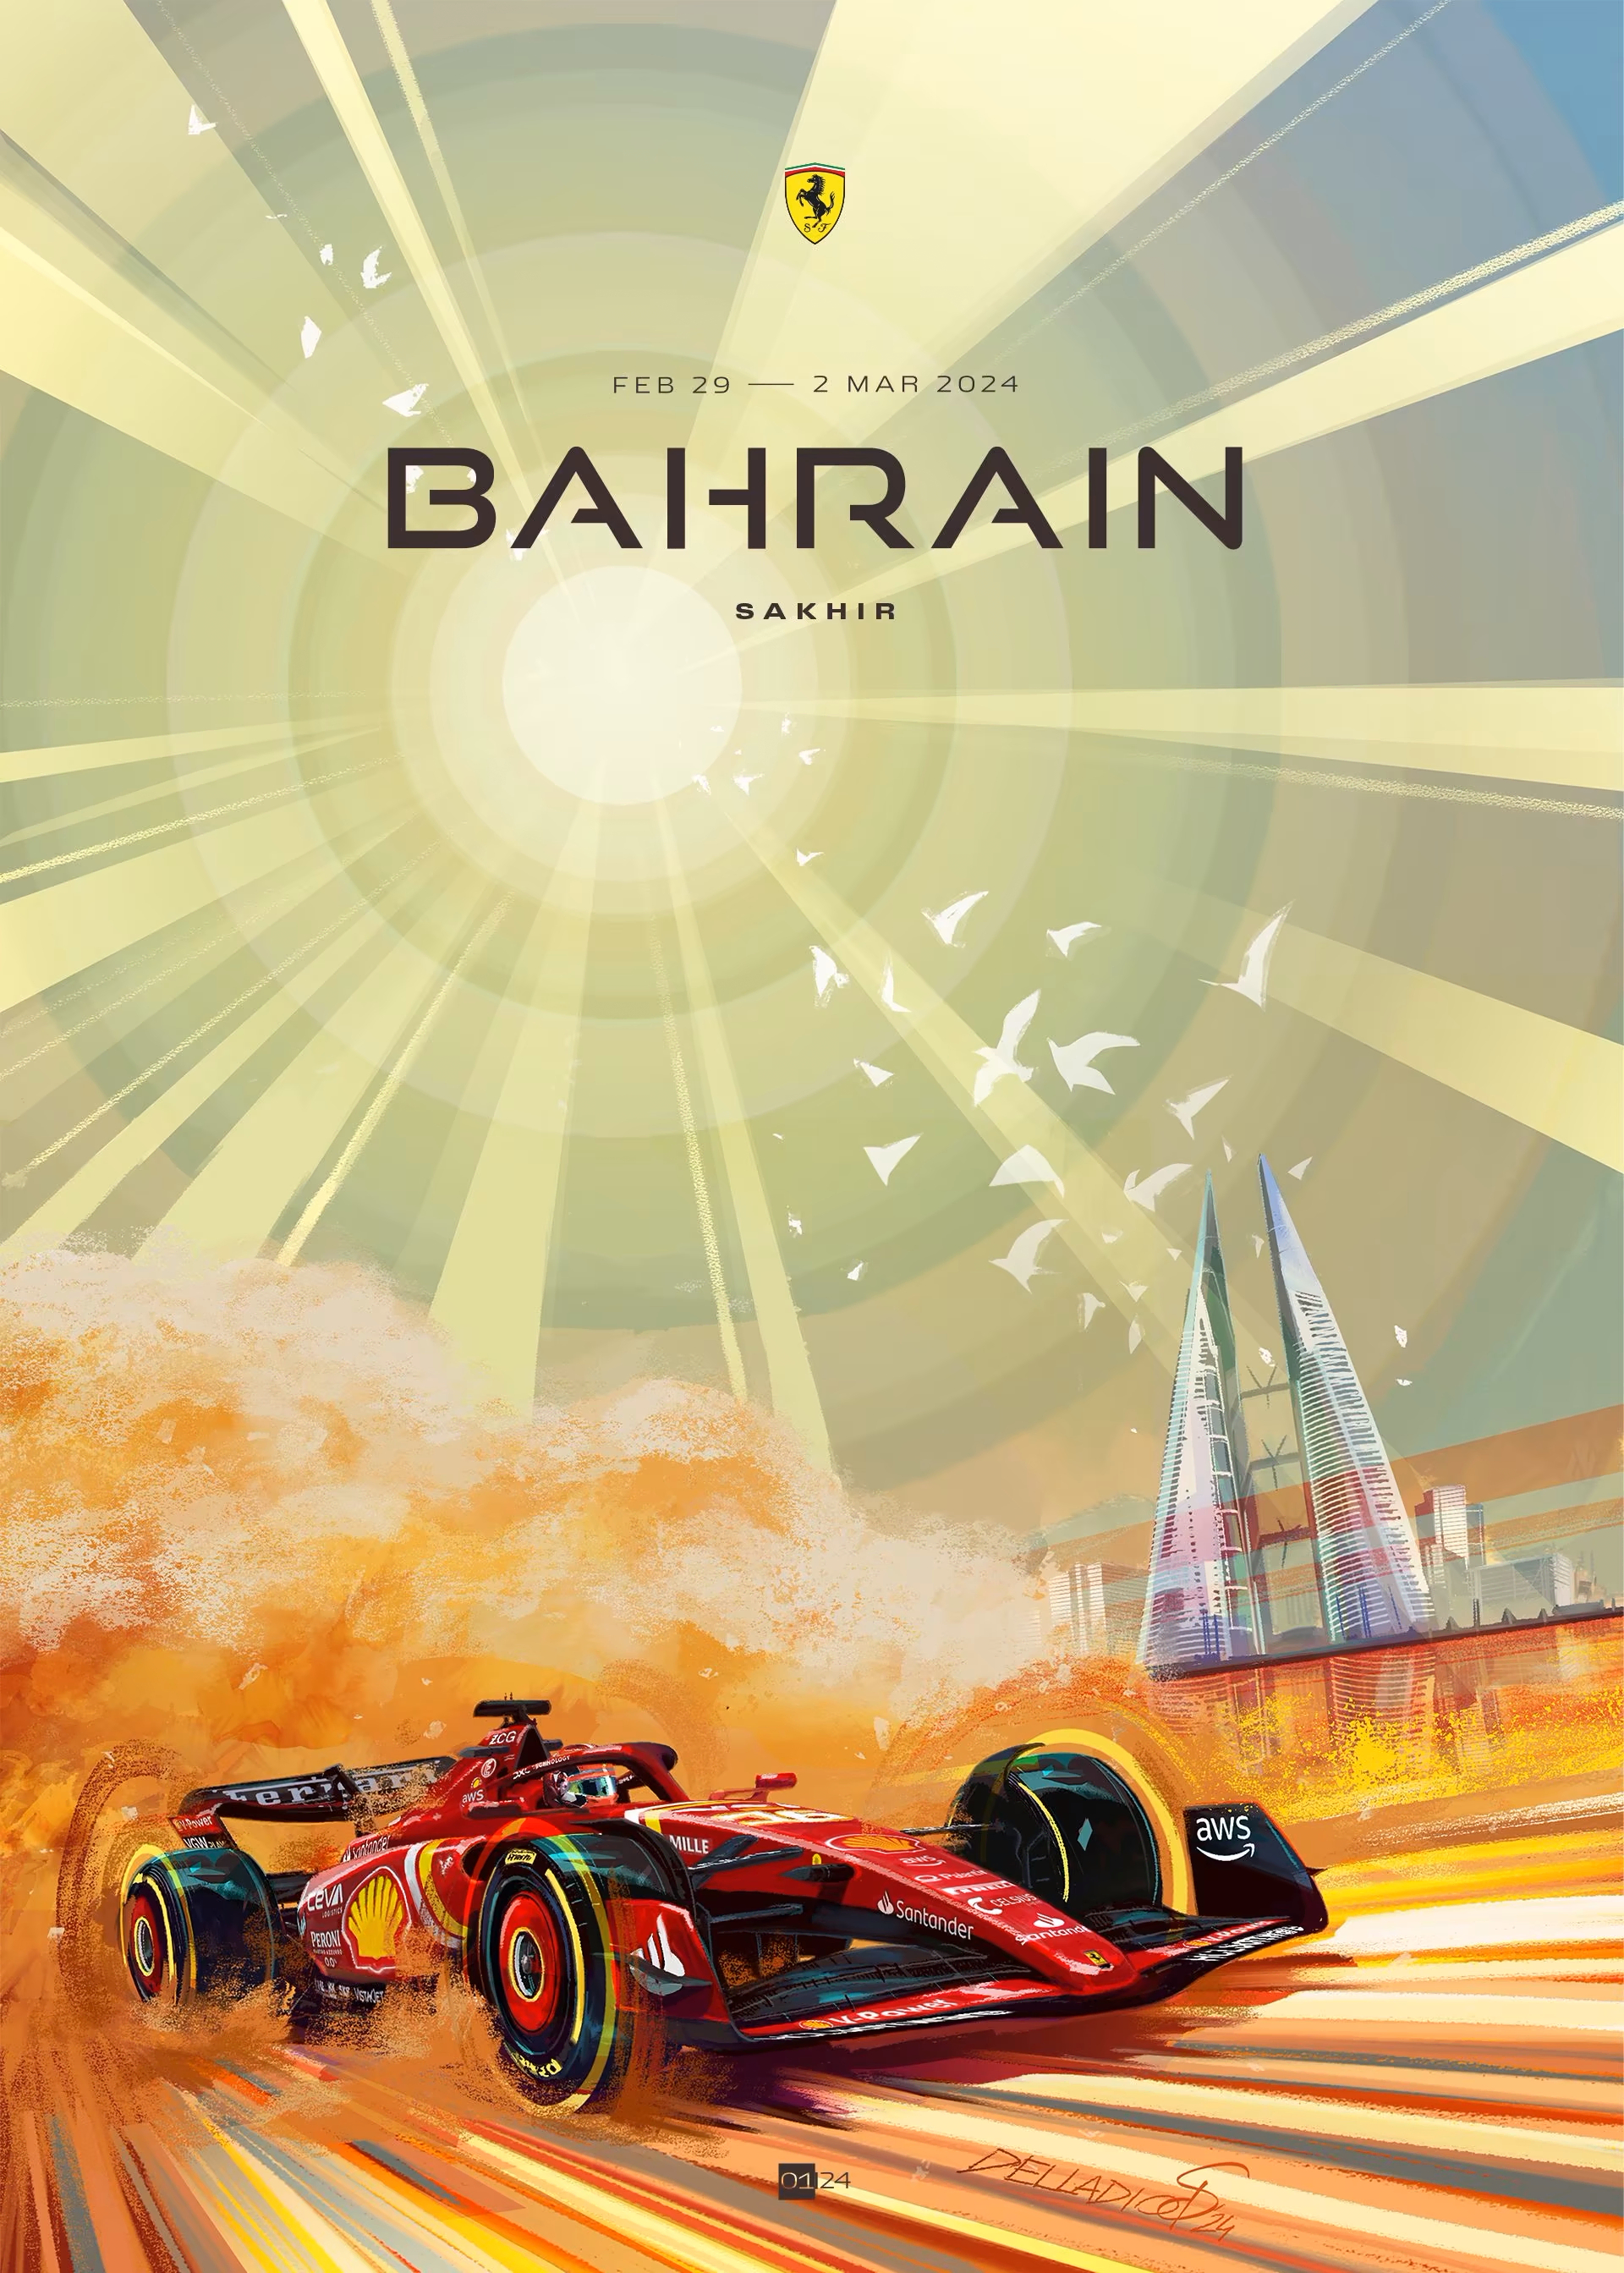 2024 Ferrari F1 RACE 1 Bahrain grand prix race cover art poster